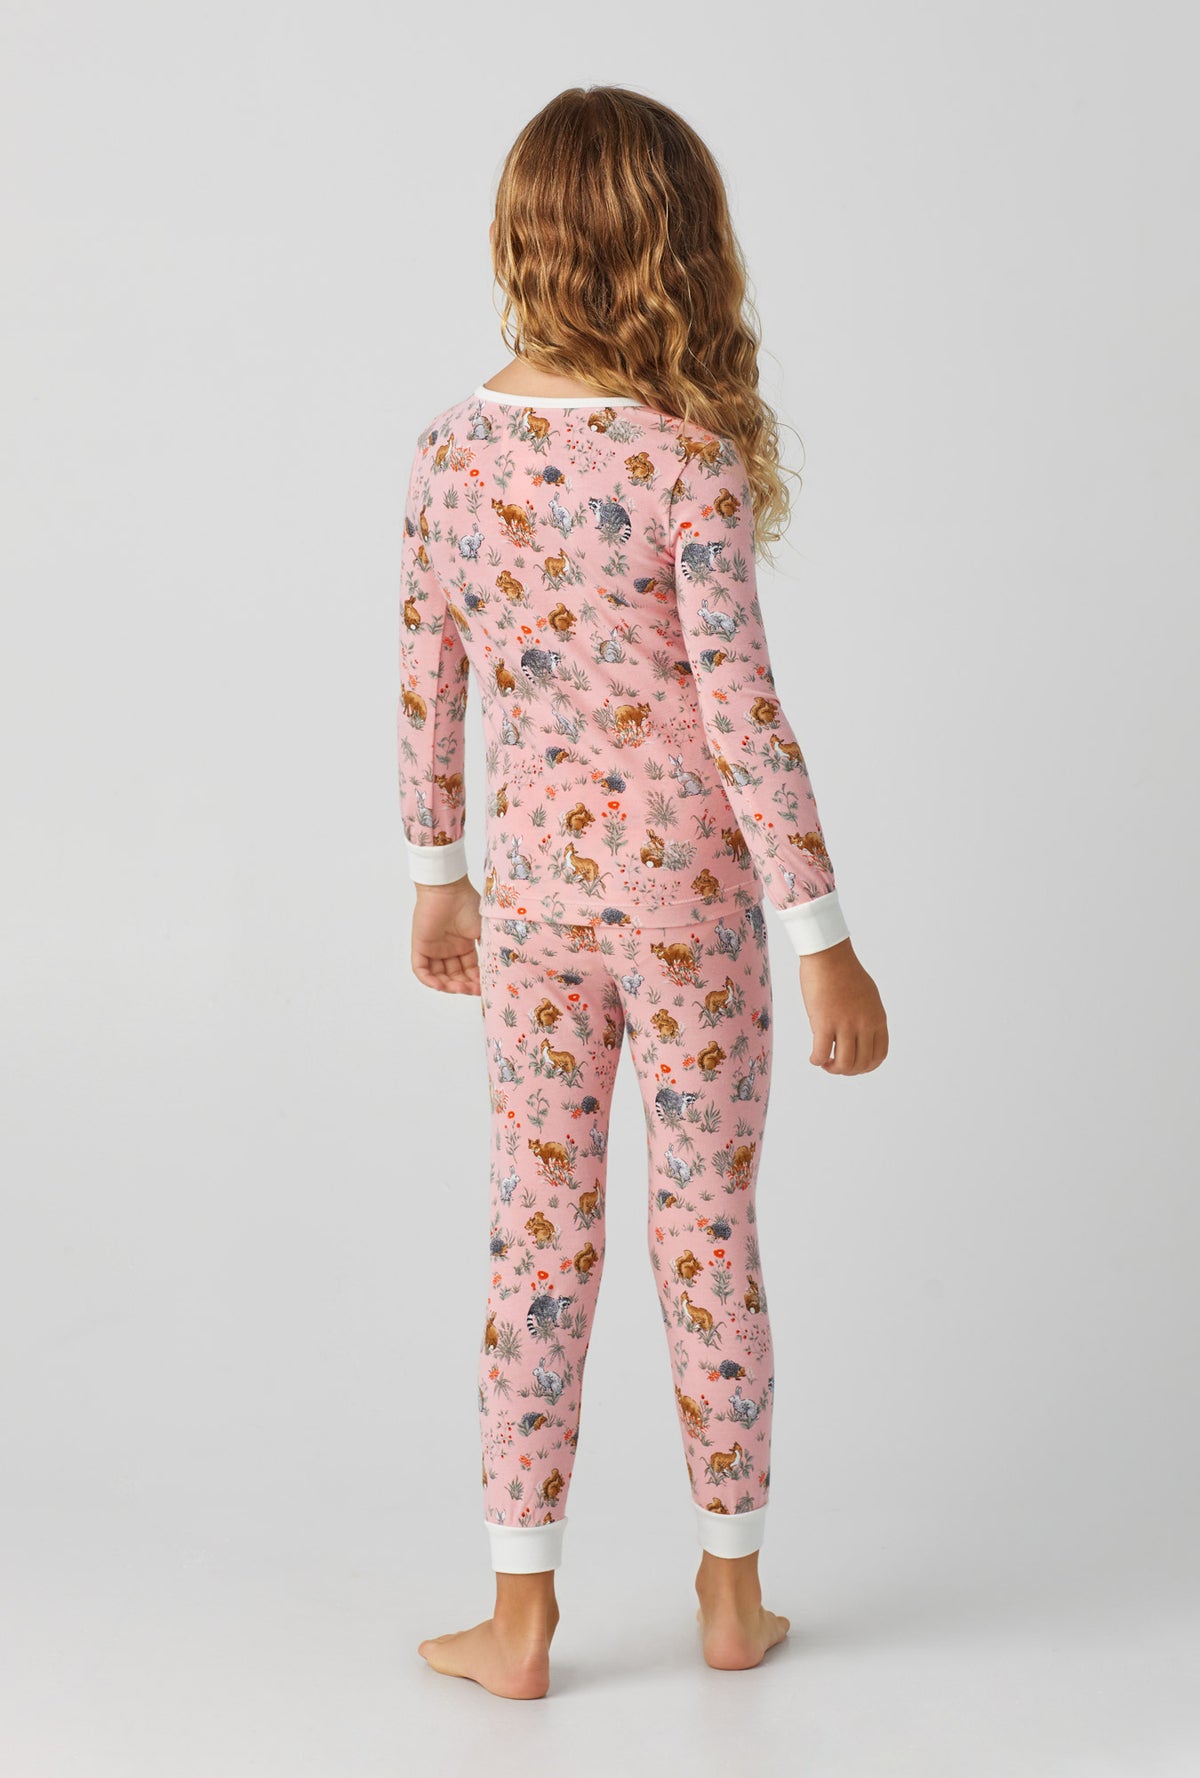 A girl wearing Forest Friends Long Sleeve Stretch Jersey Kids PJ Set